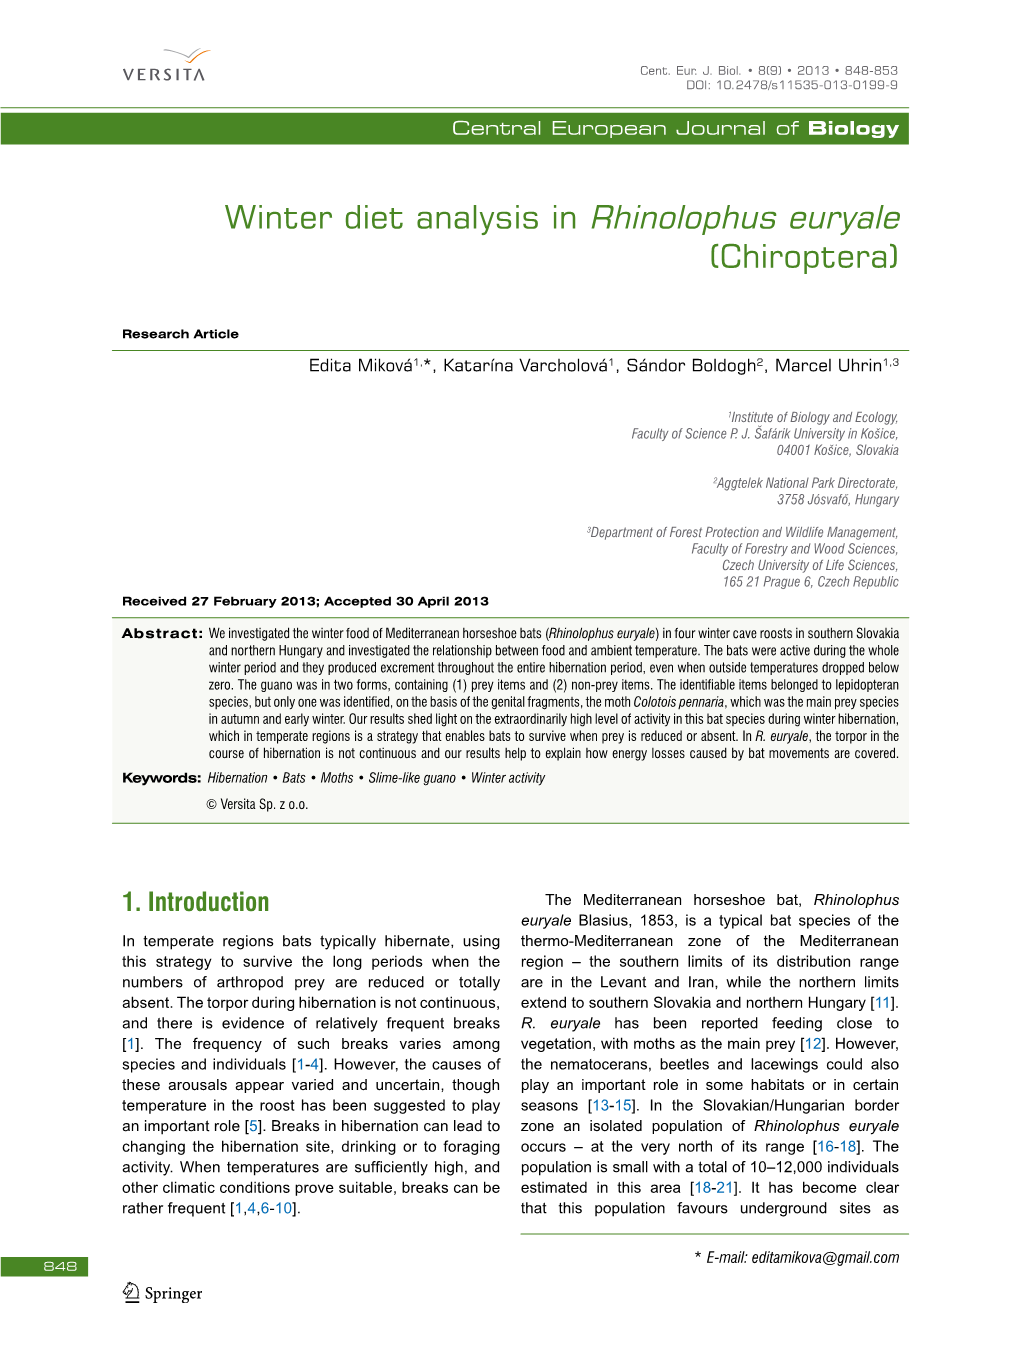 Winter Diet Analysis in Rhinolophus Euryale (Chiroptera)